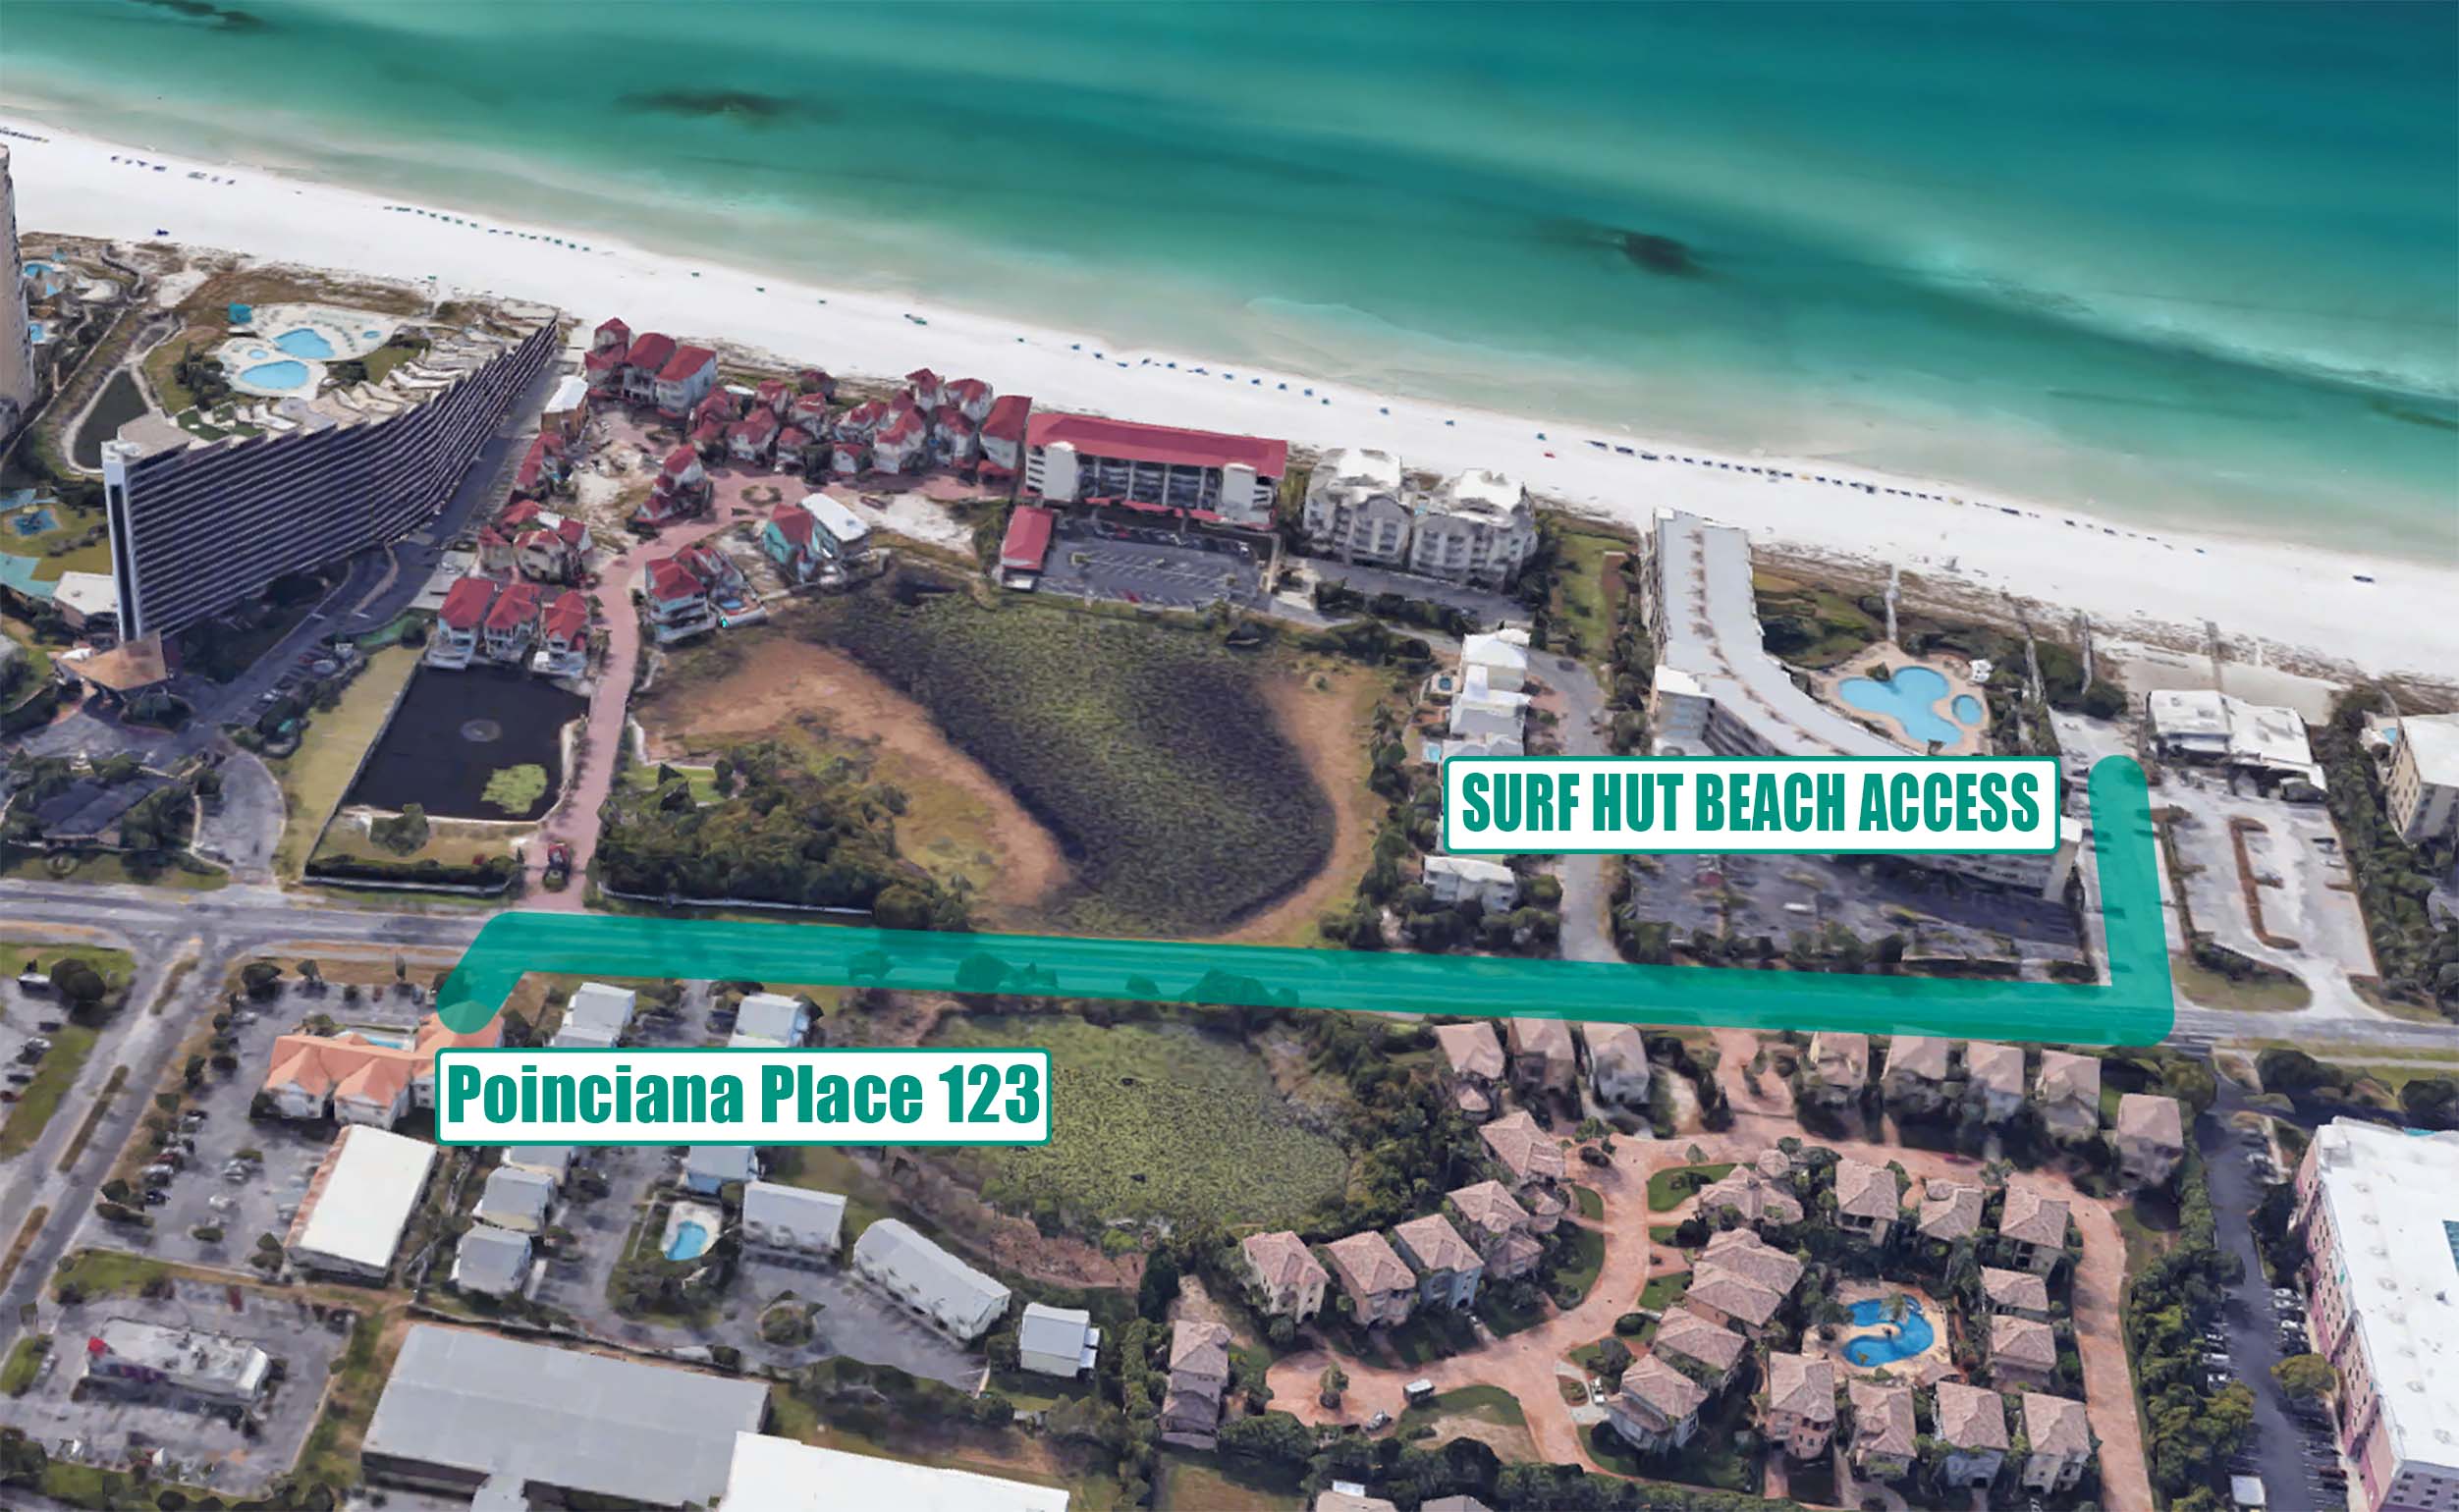 Poinciana Place Beach Access Map 